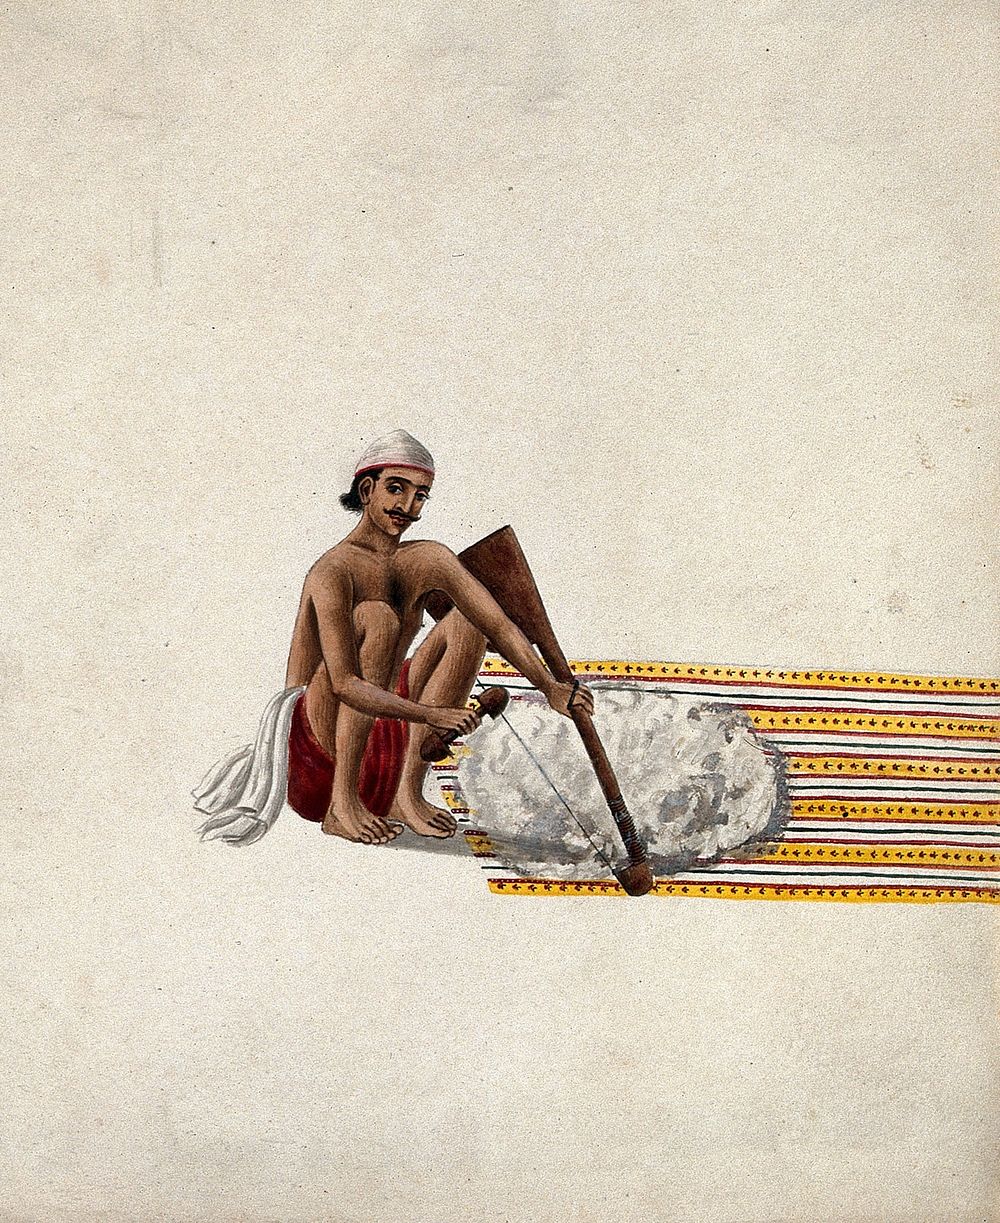 A man carding cotton. Gouache painting by an Indian artist.